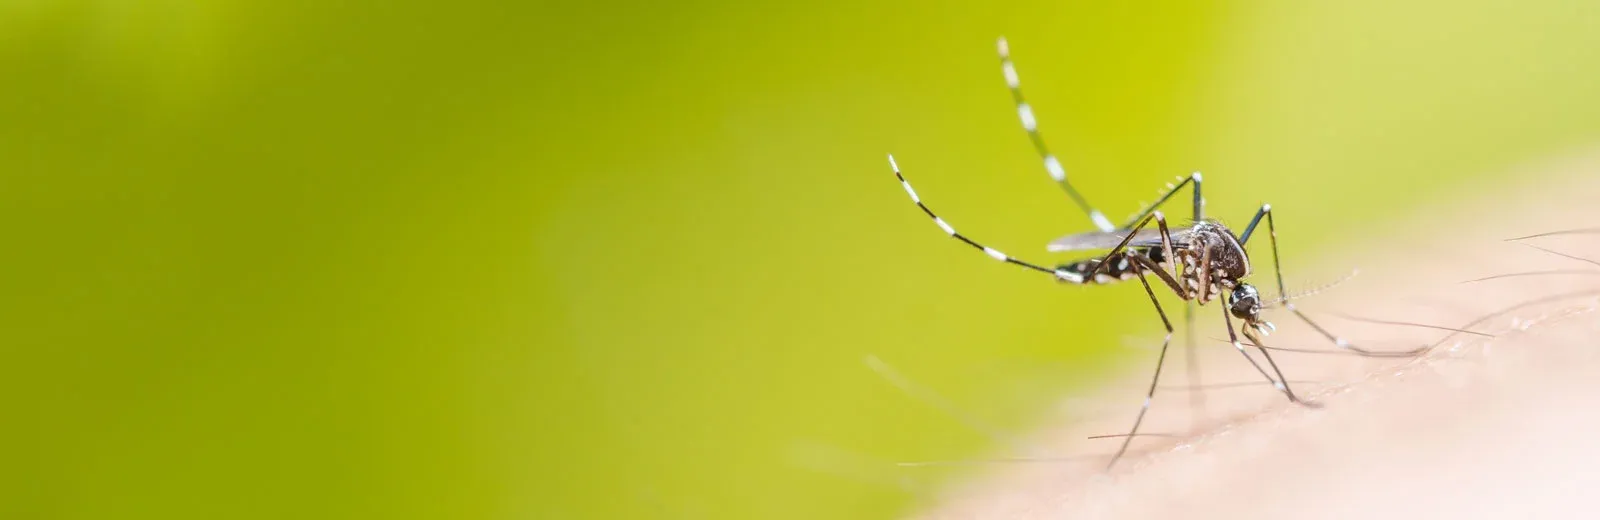 closeup image of a mosquito outside